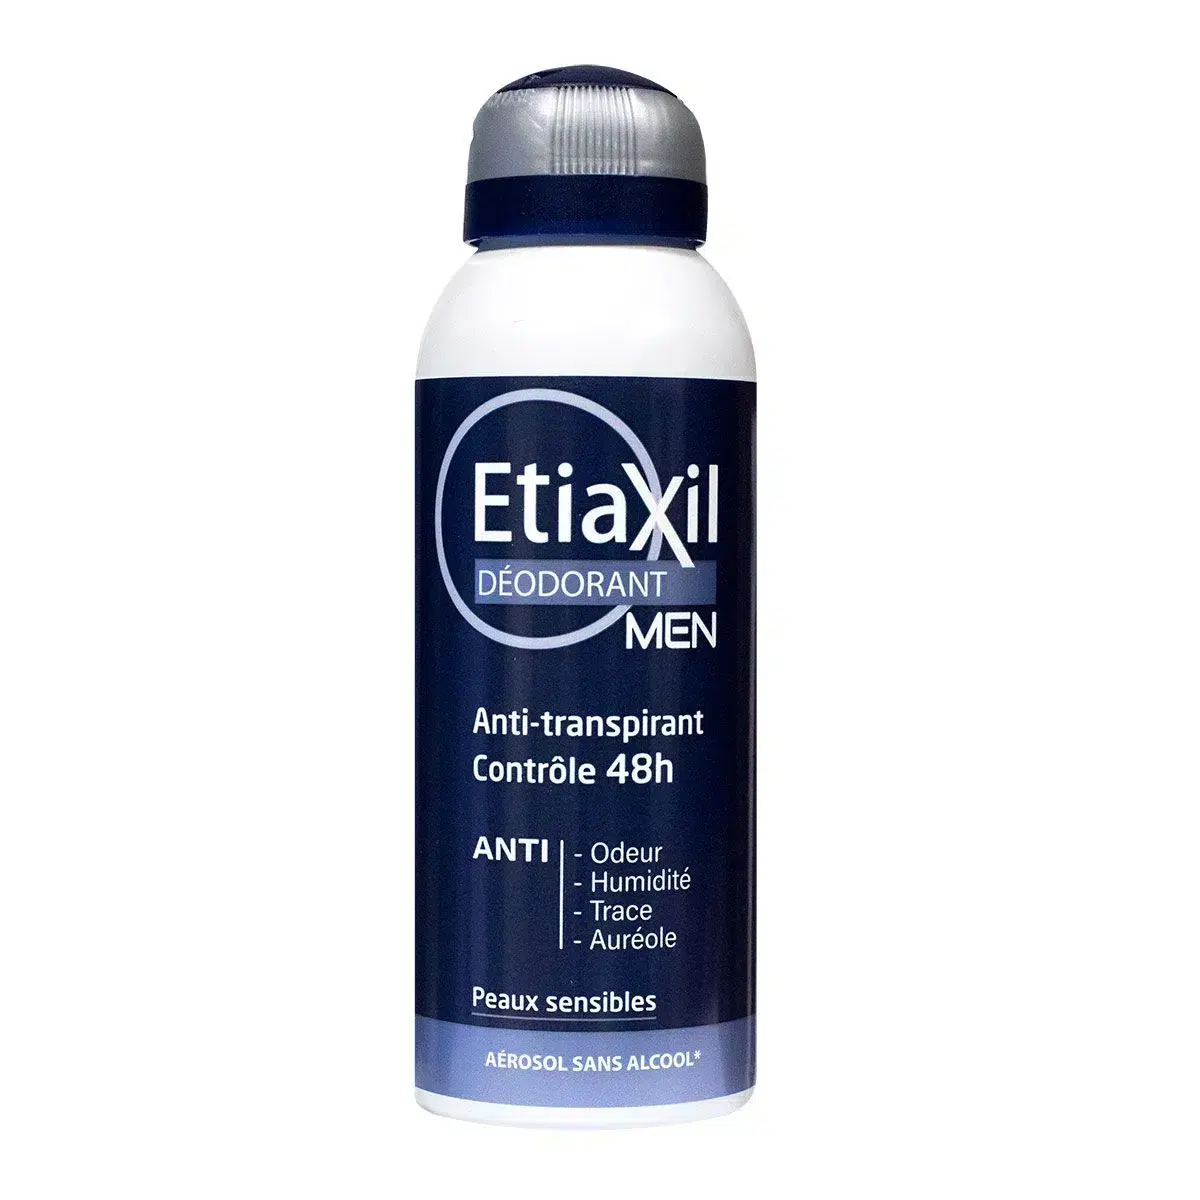 etiaxil men deodorant anti-transpirant controle-48h 150ml